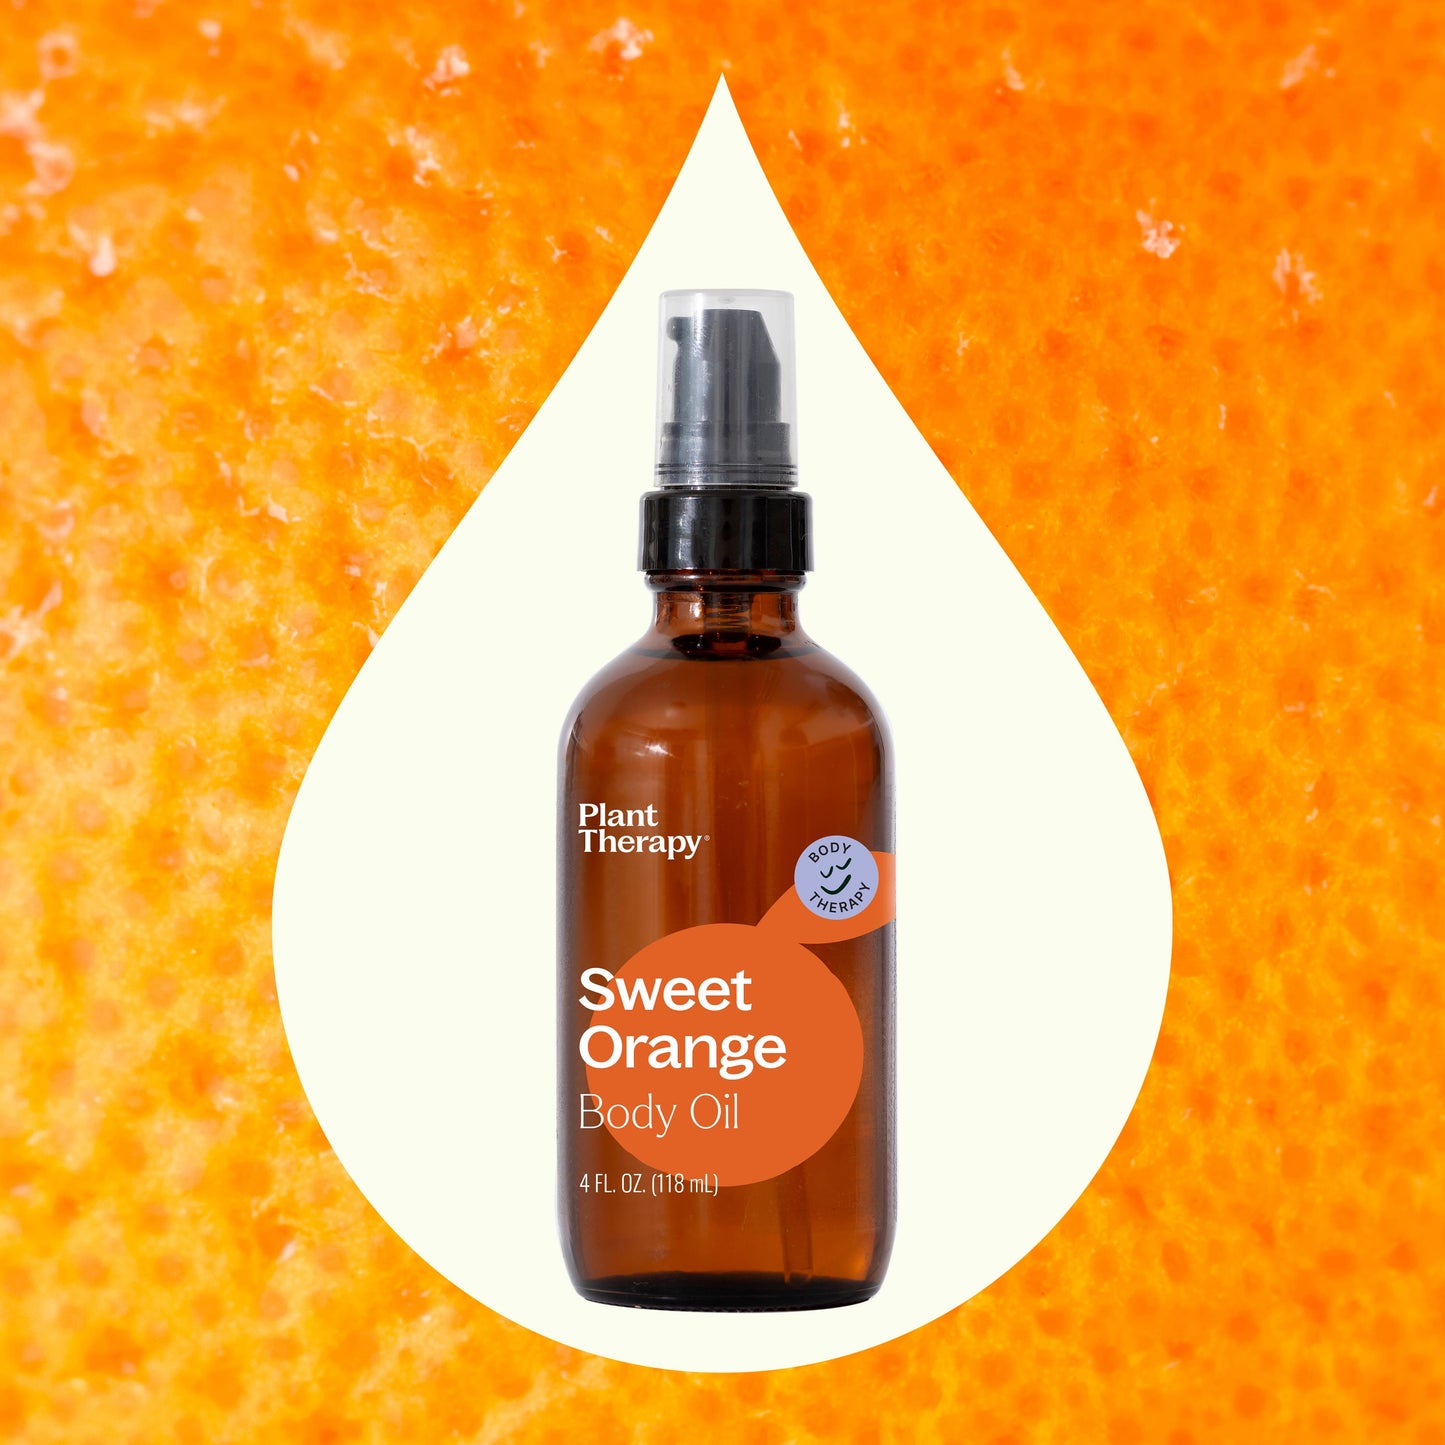 Sweet Orange Body Oil front label